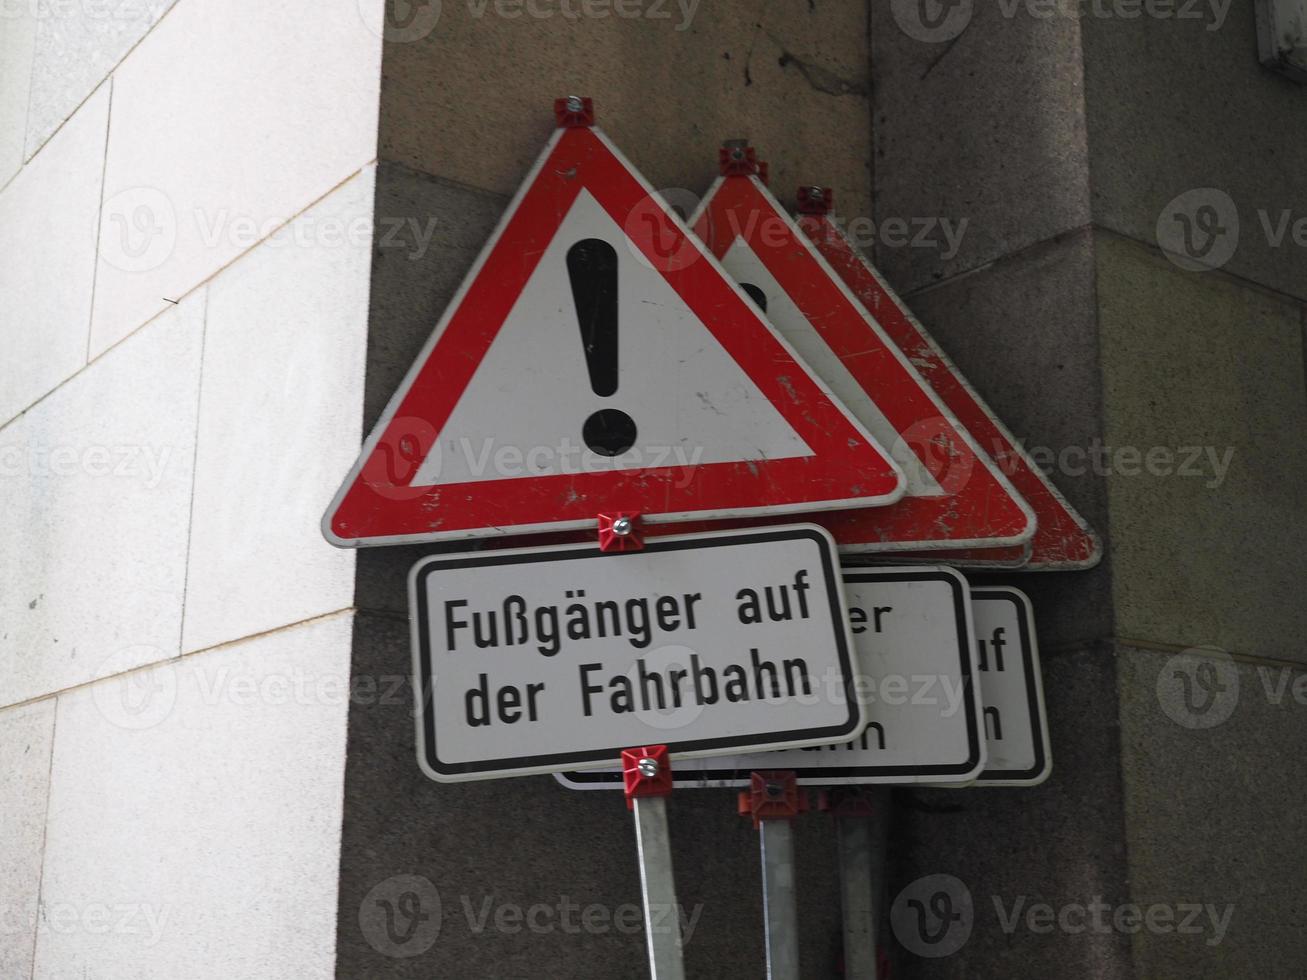 fusgaenger auf der fahrbahn traduzione pedoni su il strada foto